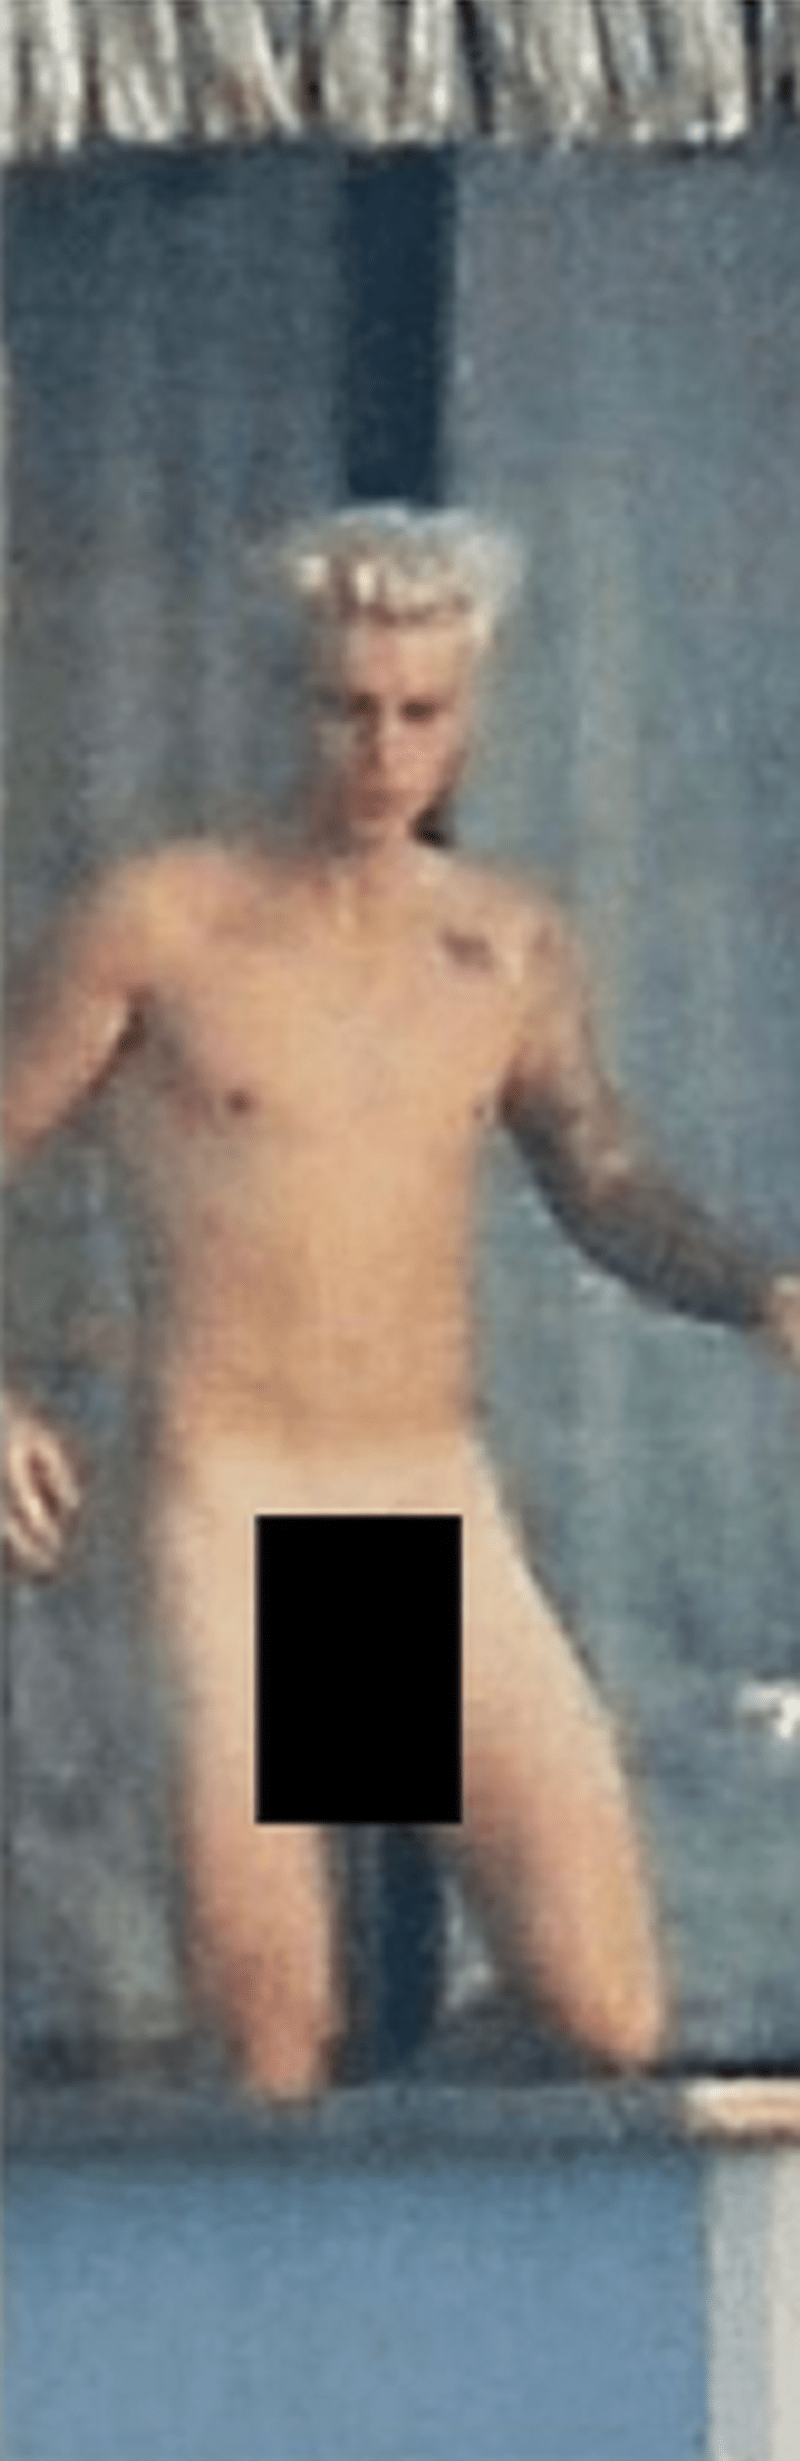 Bieberovy nahé fotky na Instagramu.